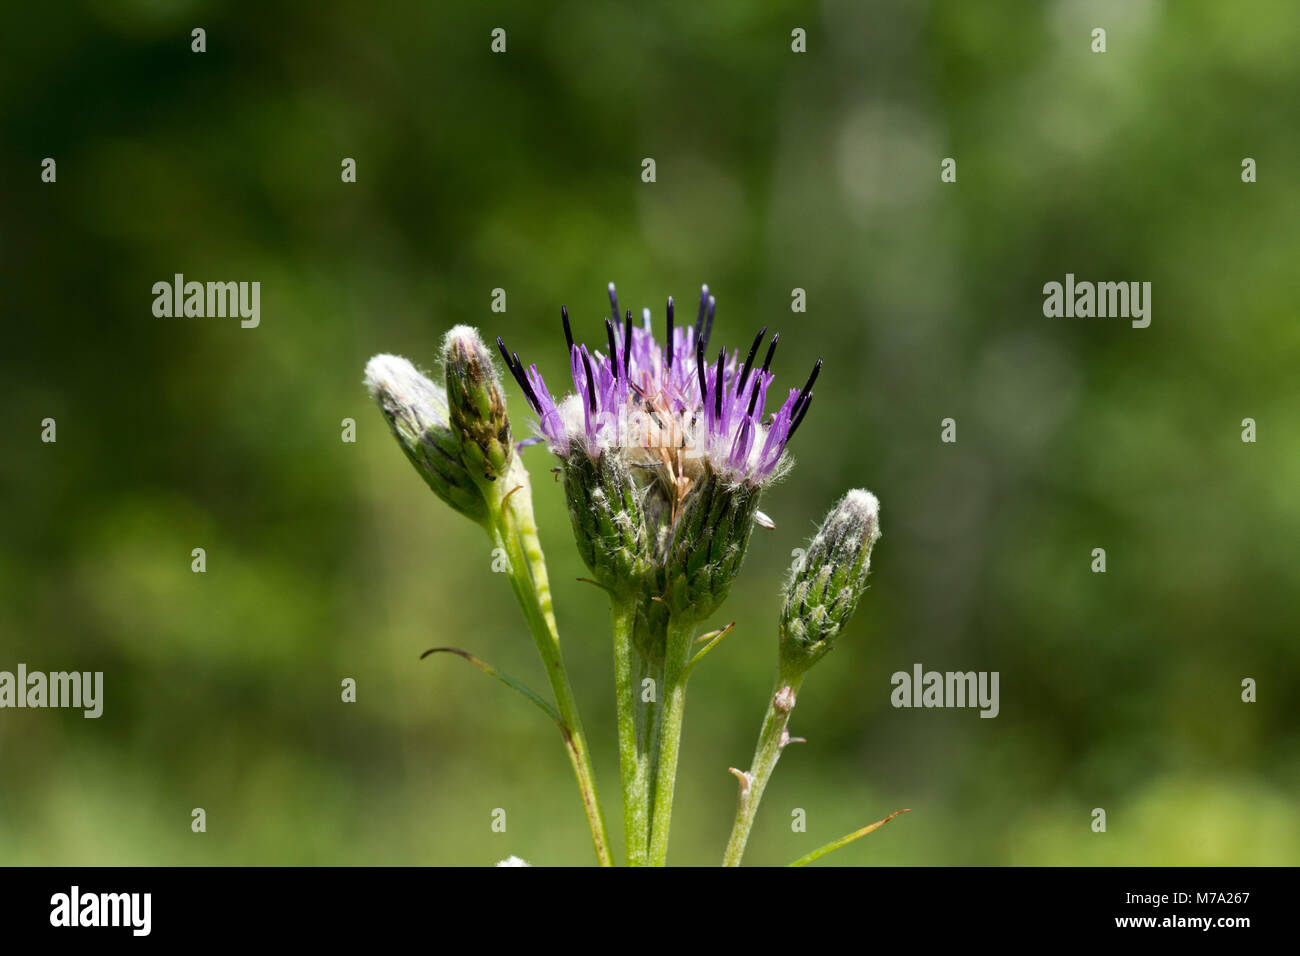 Inflorescence of Estonian sawwort (Saussurea alpina subsp. esthonica) Stock Photo